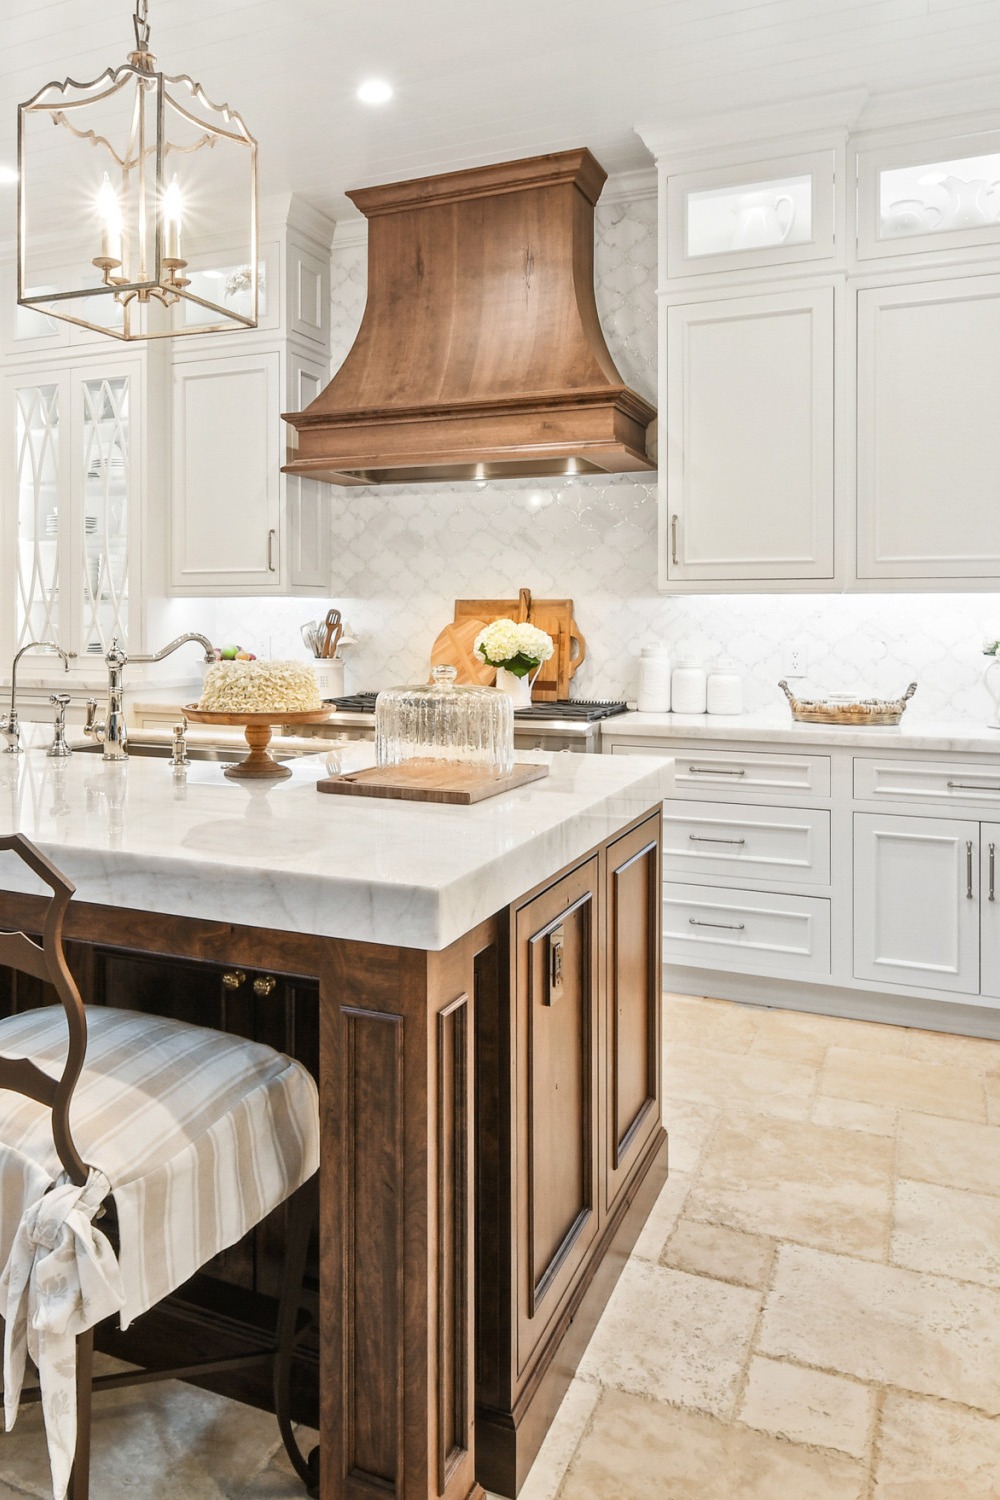 White Kitchen Cabinets White Cabinets Arabesque Tile Backsplash Travertine Floor